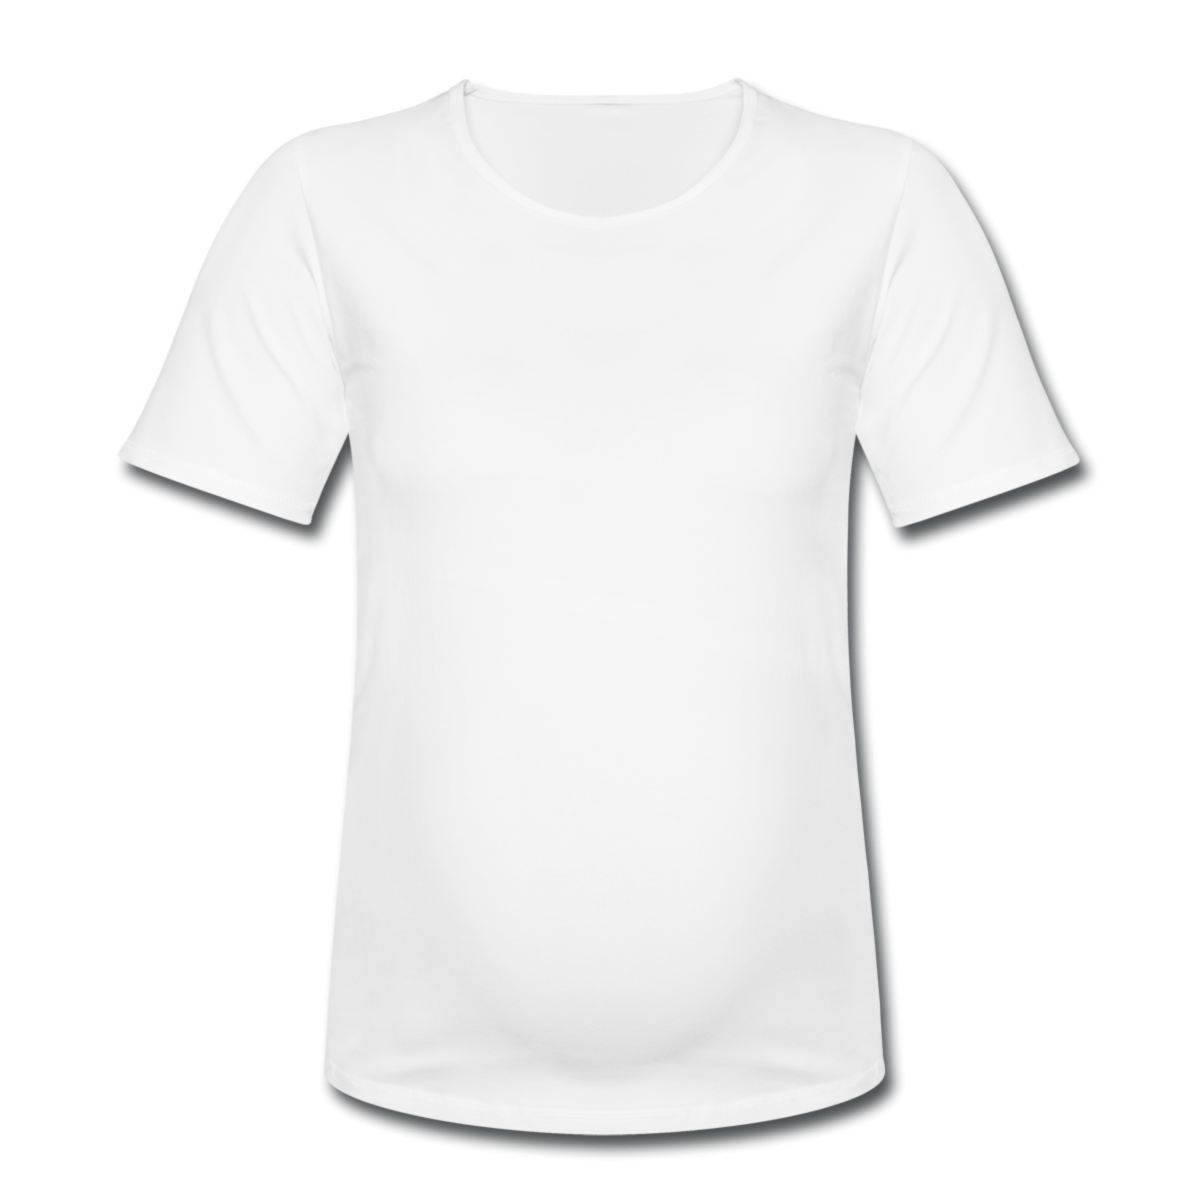 white-blank-t-shirt-clipart-best